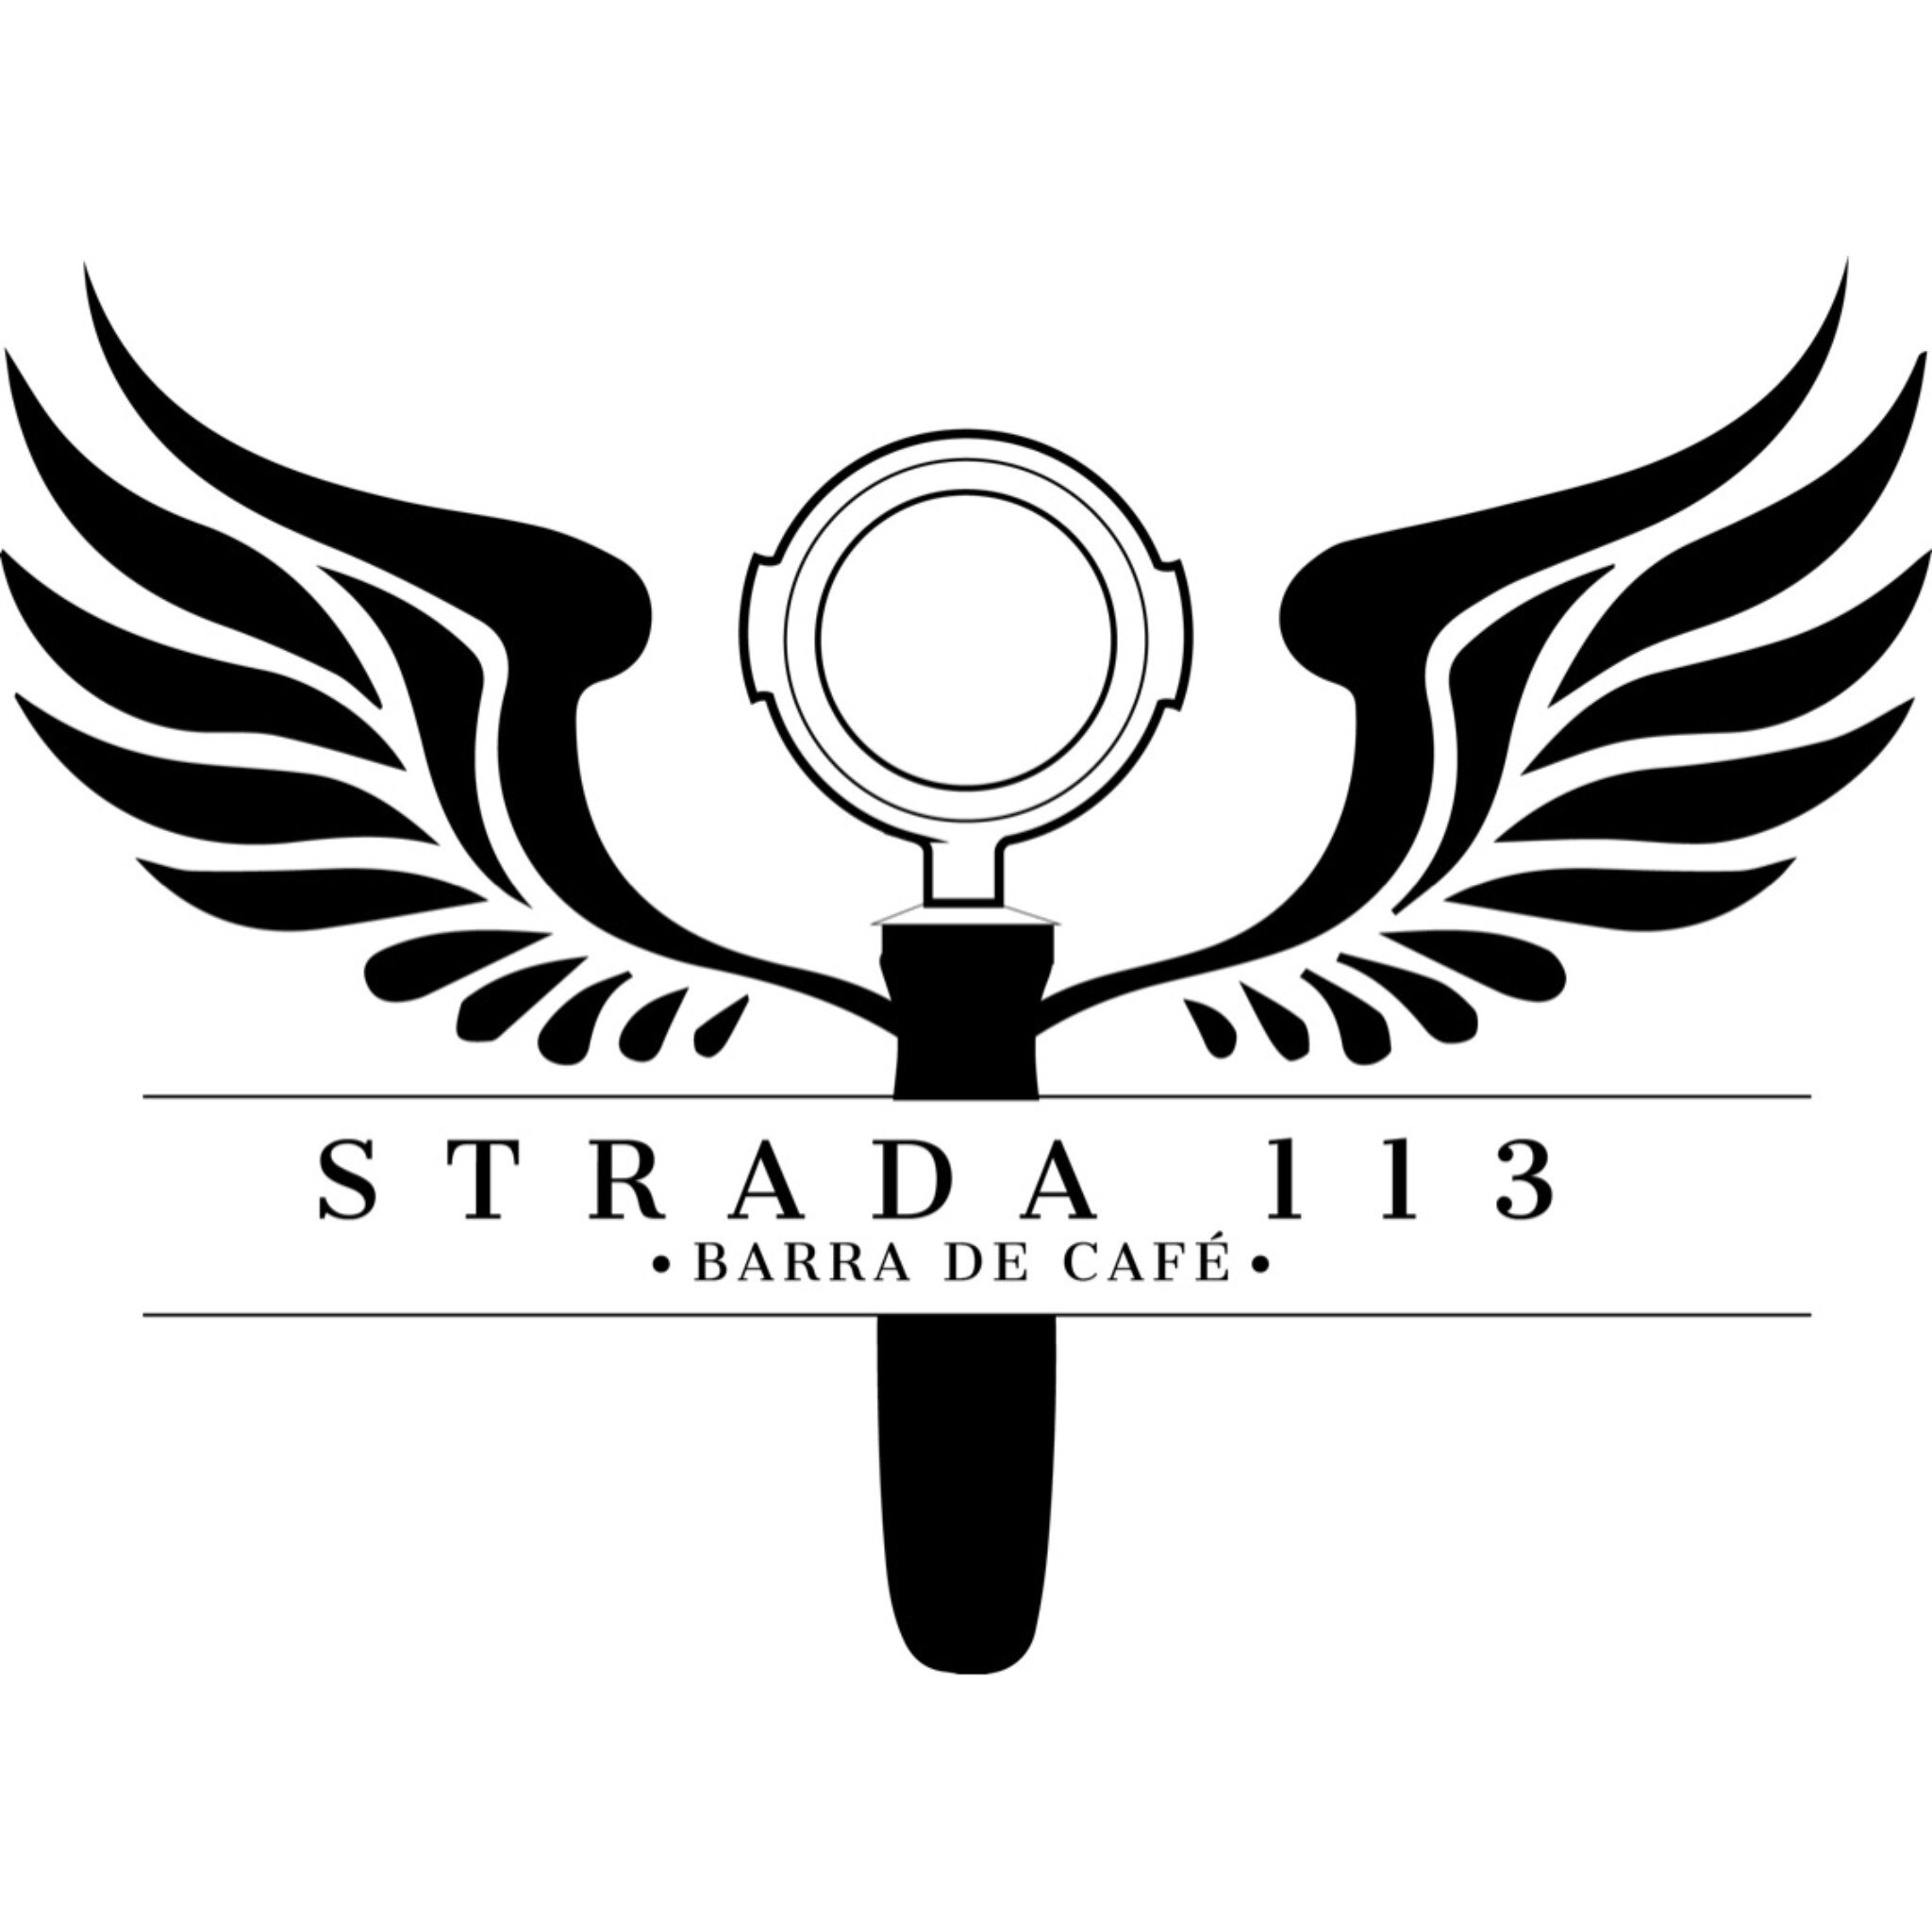 STRADA 113